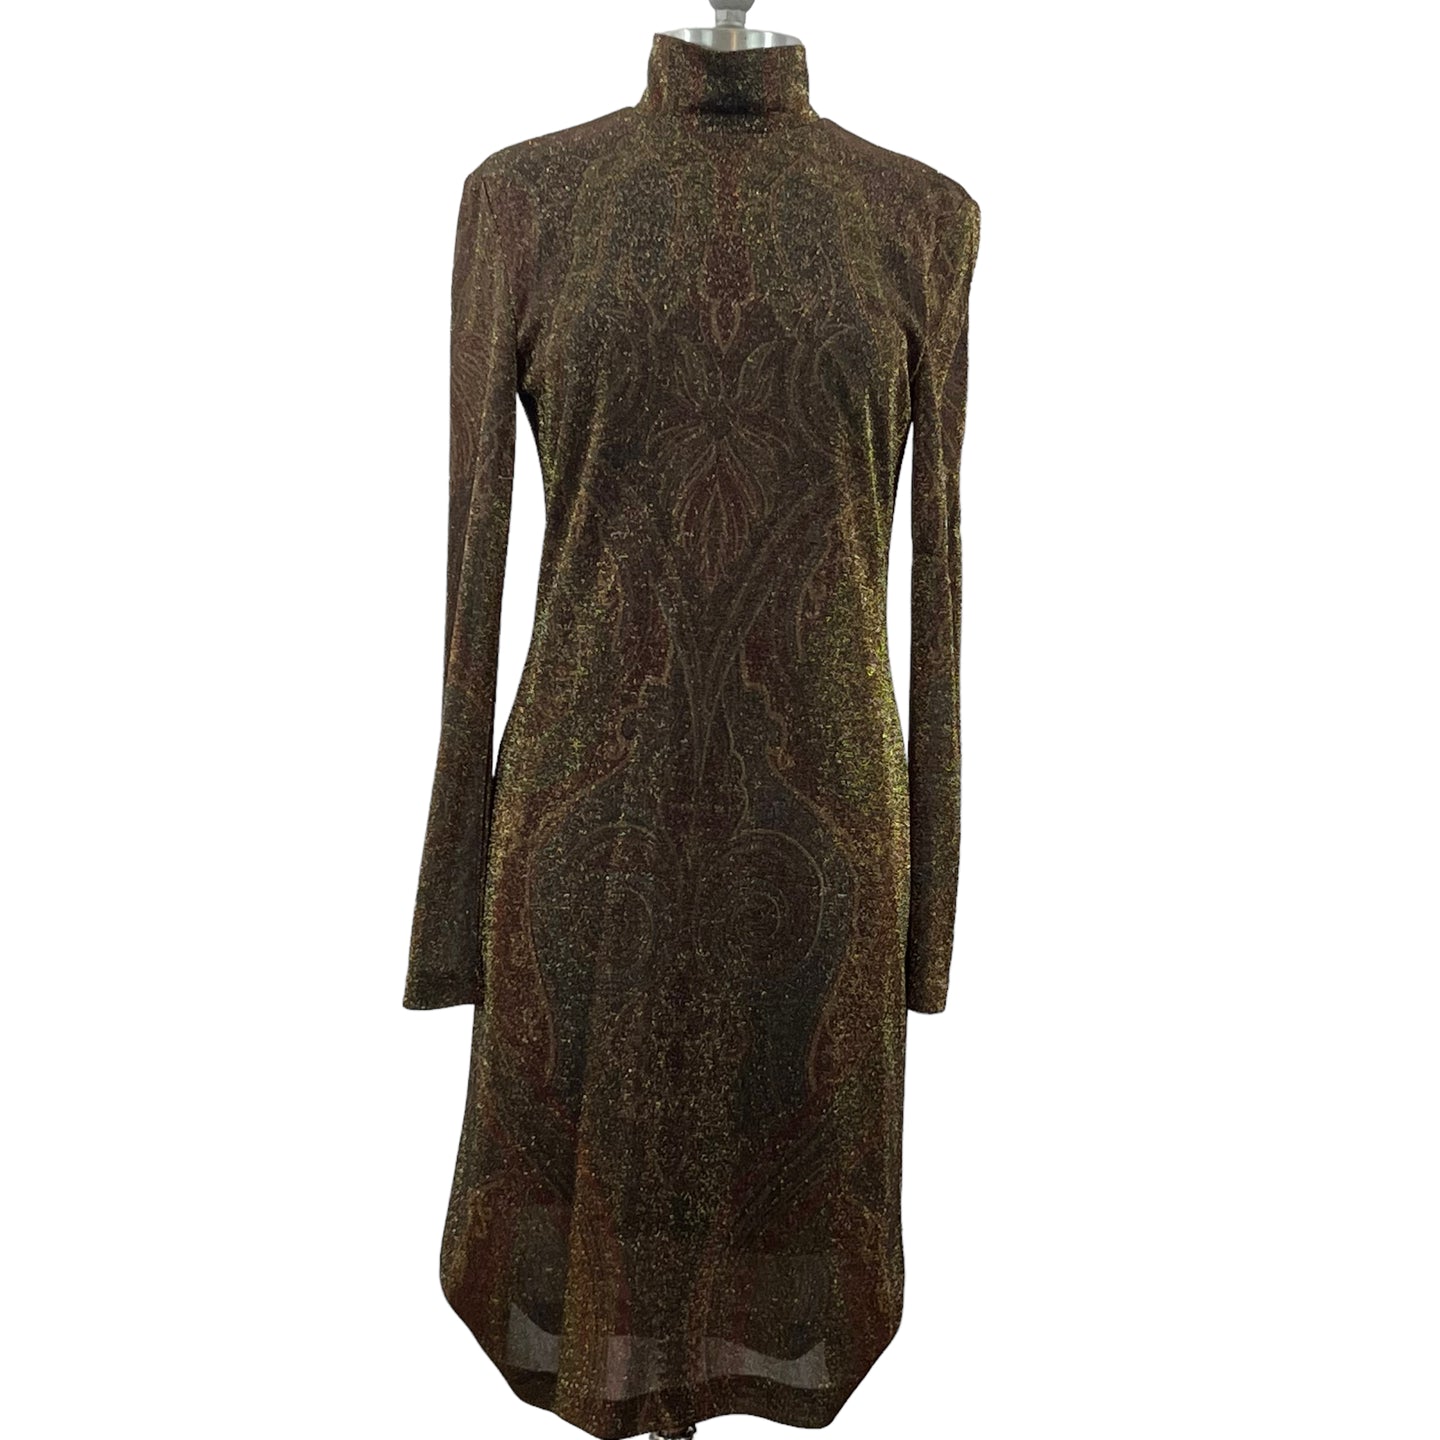 Vintage Long Sleeve Knit Turtleneck Outfit Glitter Dress